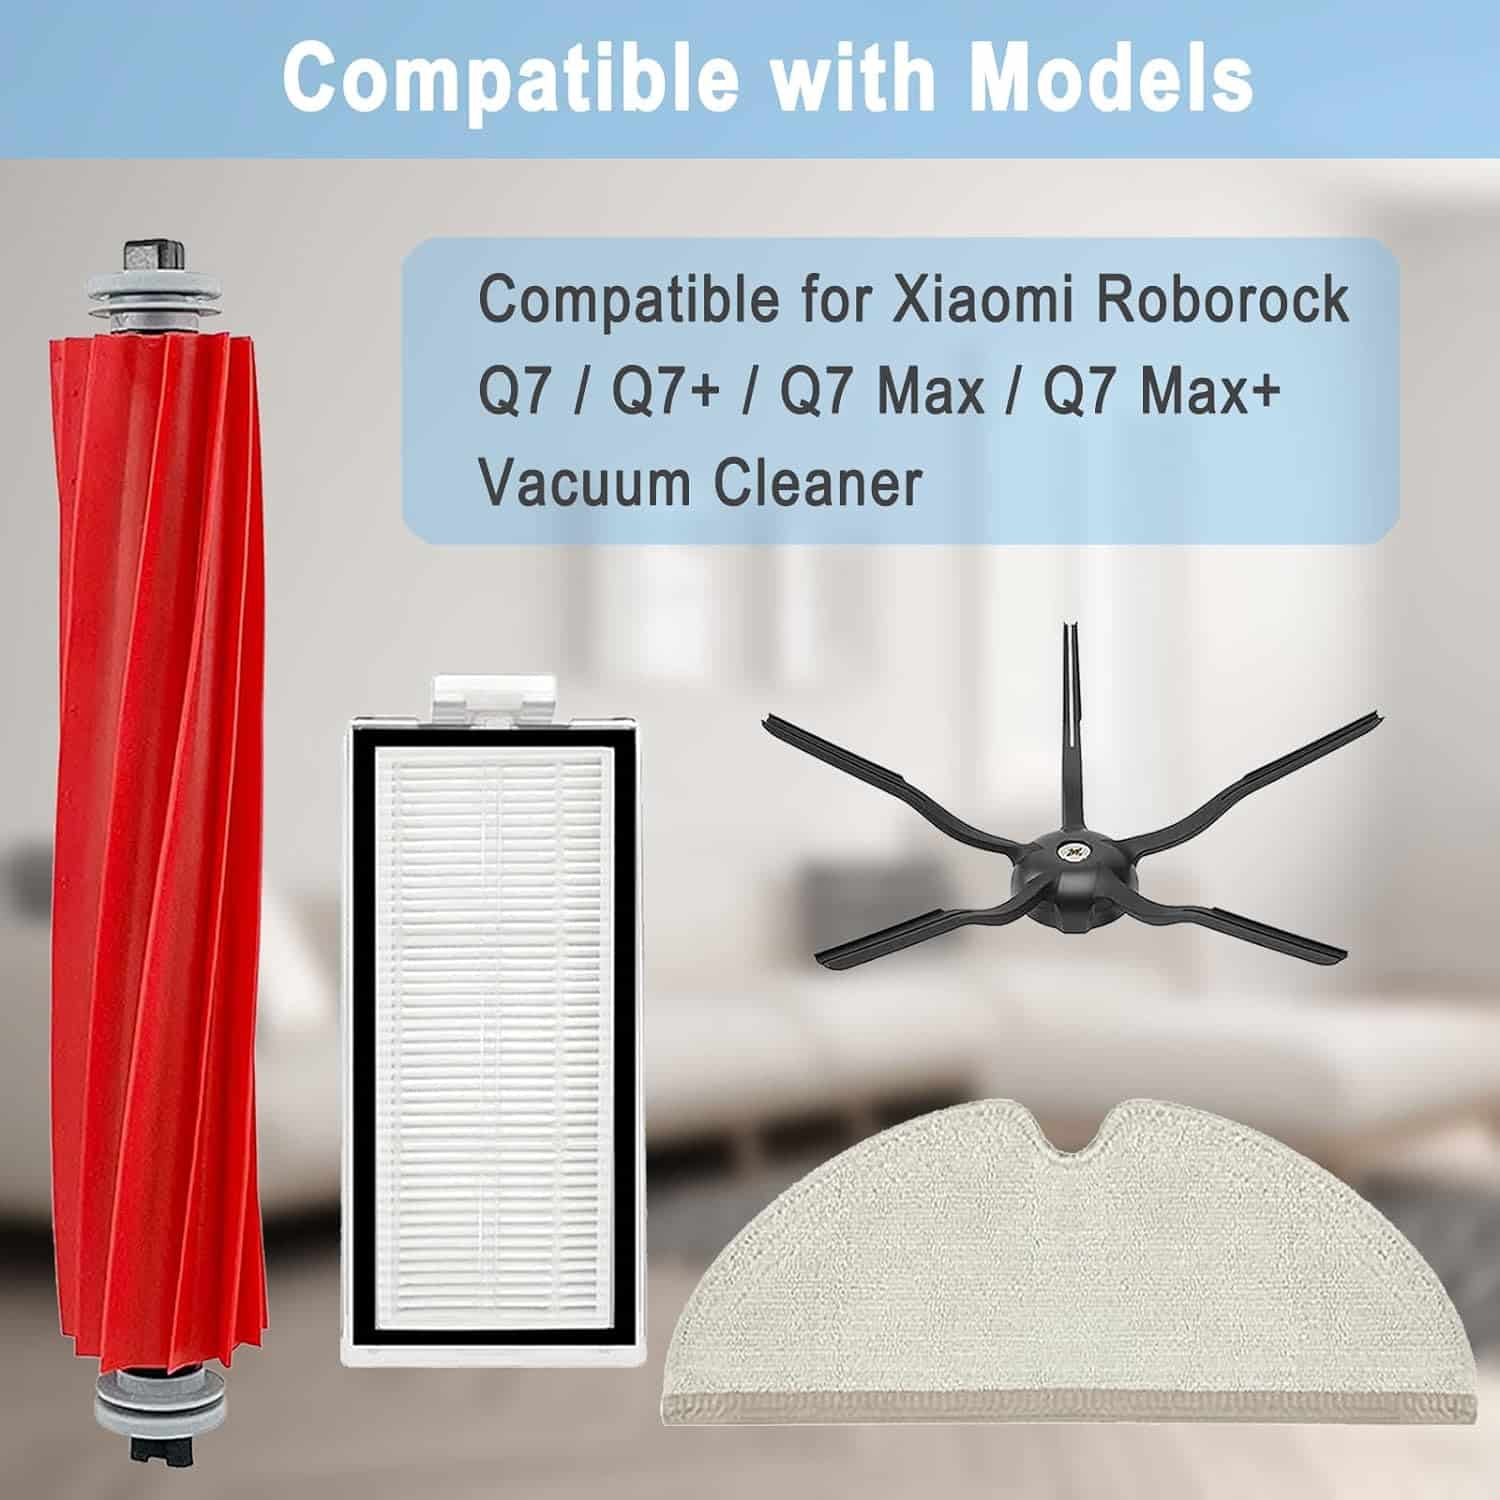 Upgrade Your Cleaning Routine with the LesinaVac Accessories Kit for Xiaomi Roborock Q7 / Q7+ / Q7 Max+ Robot Vacuum